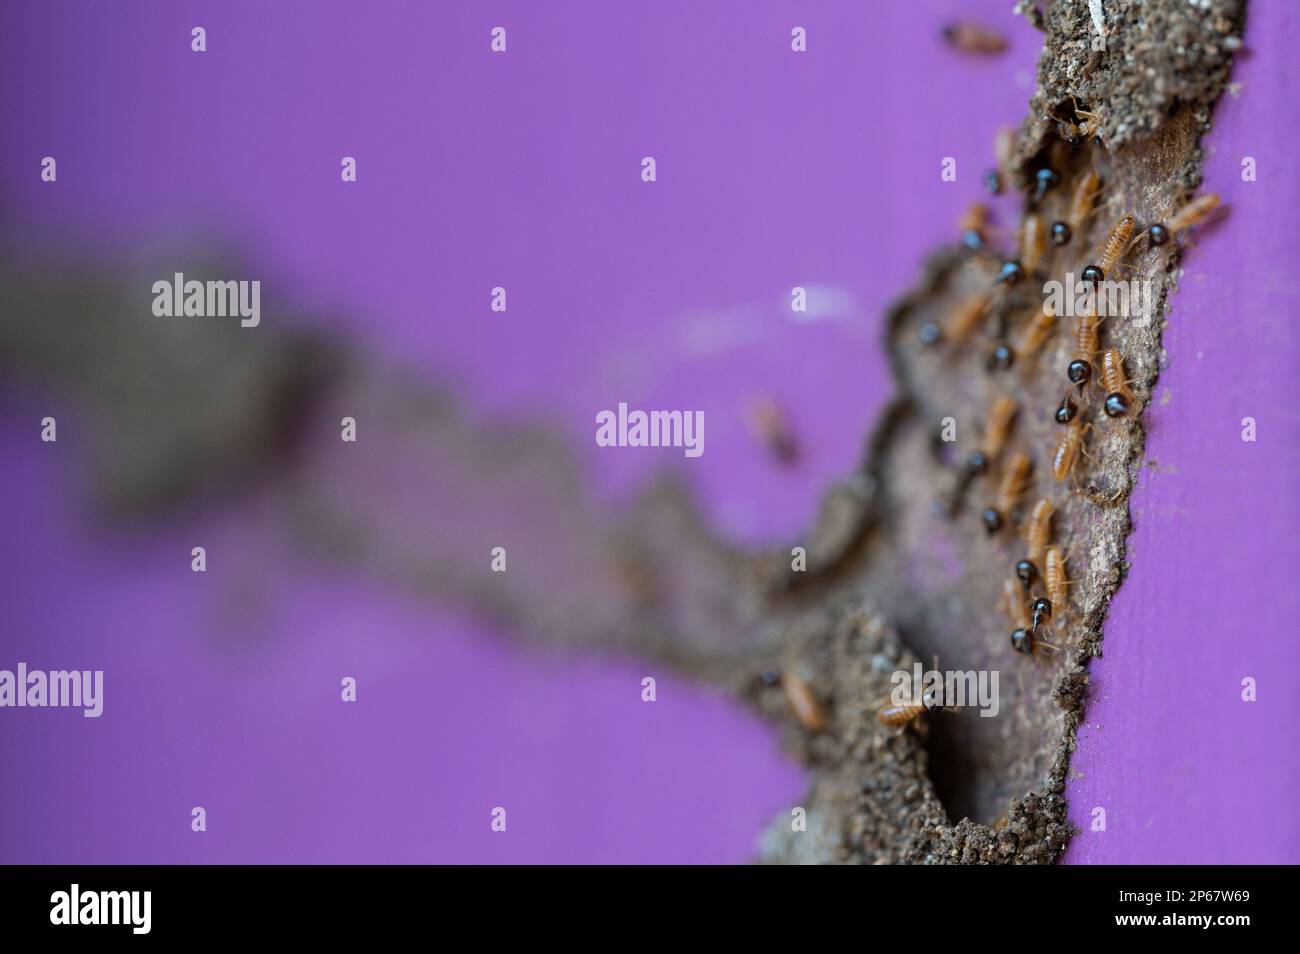 Schädlingsbefall-Termiten-Insekten-Thema. Makro-Nahaufnahme junger Termiten Stockfoto